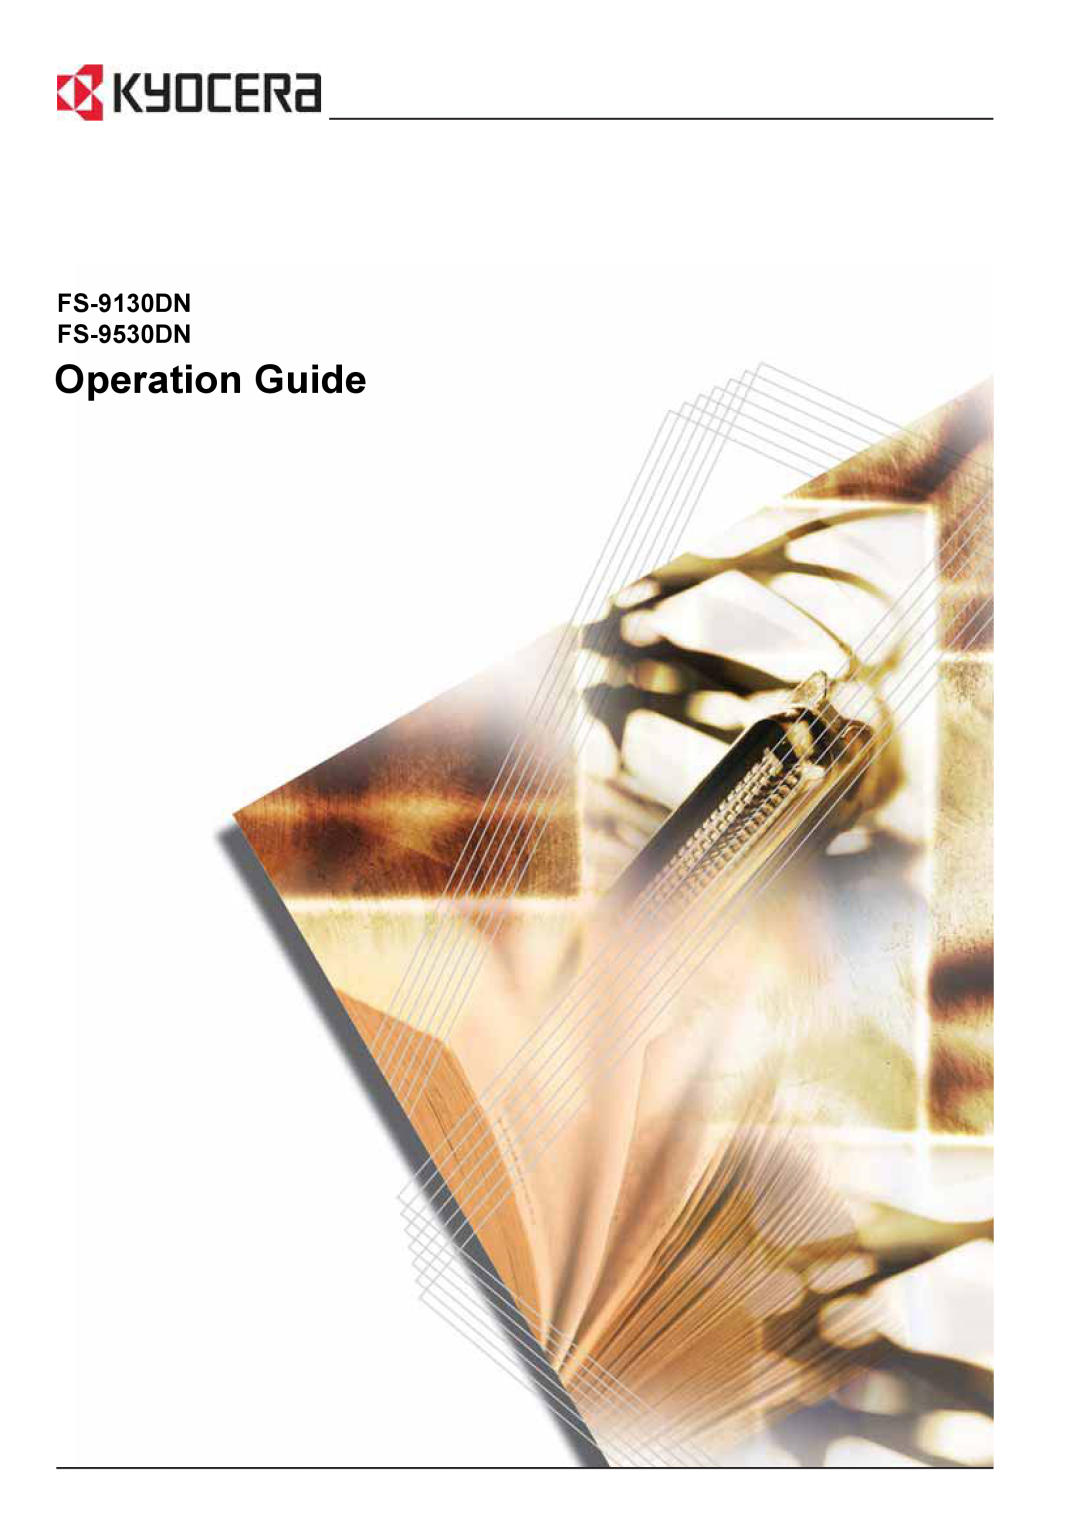 Kyocera manual Operation Guide, FS-9130DN FS-9530DN 